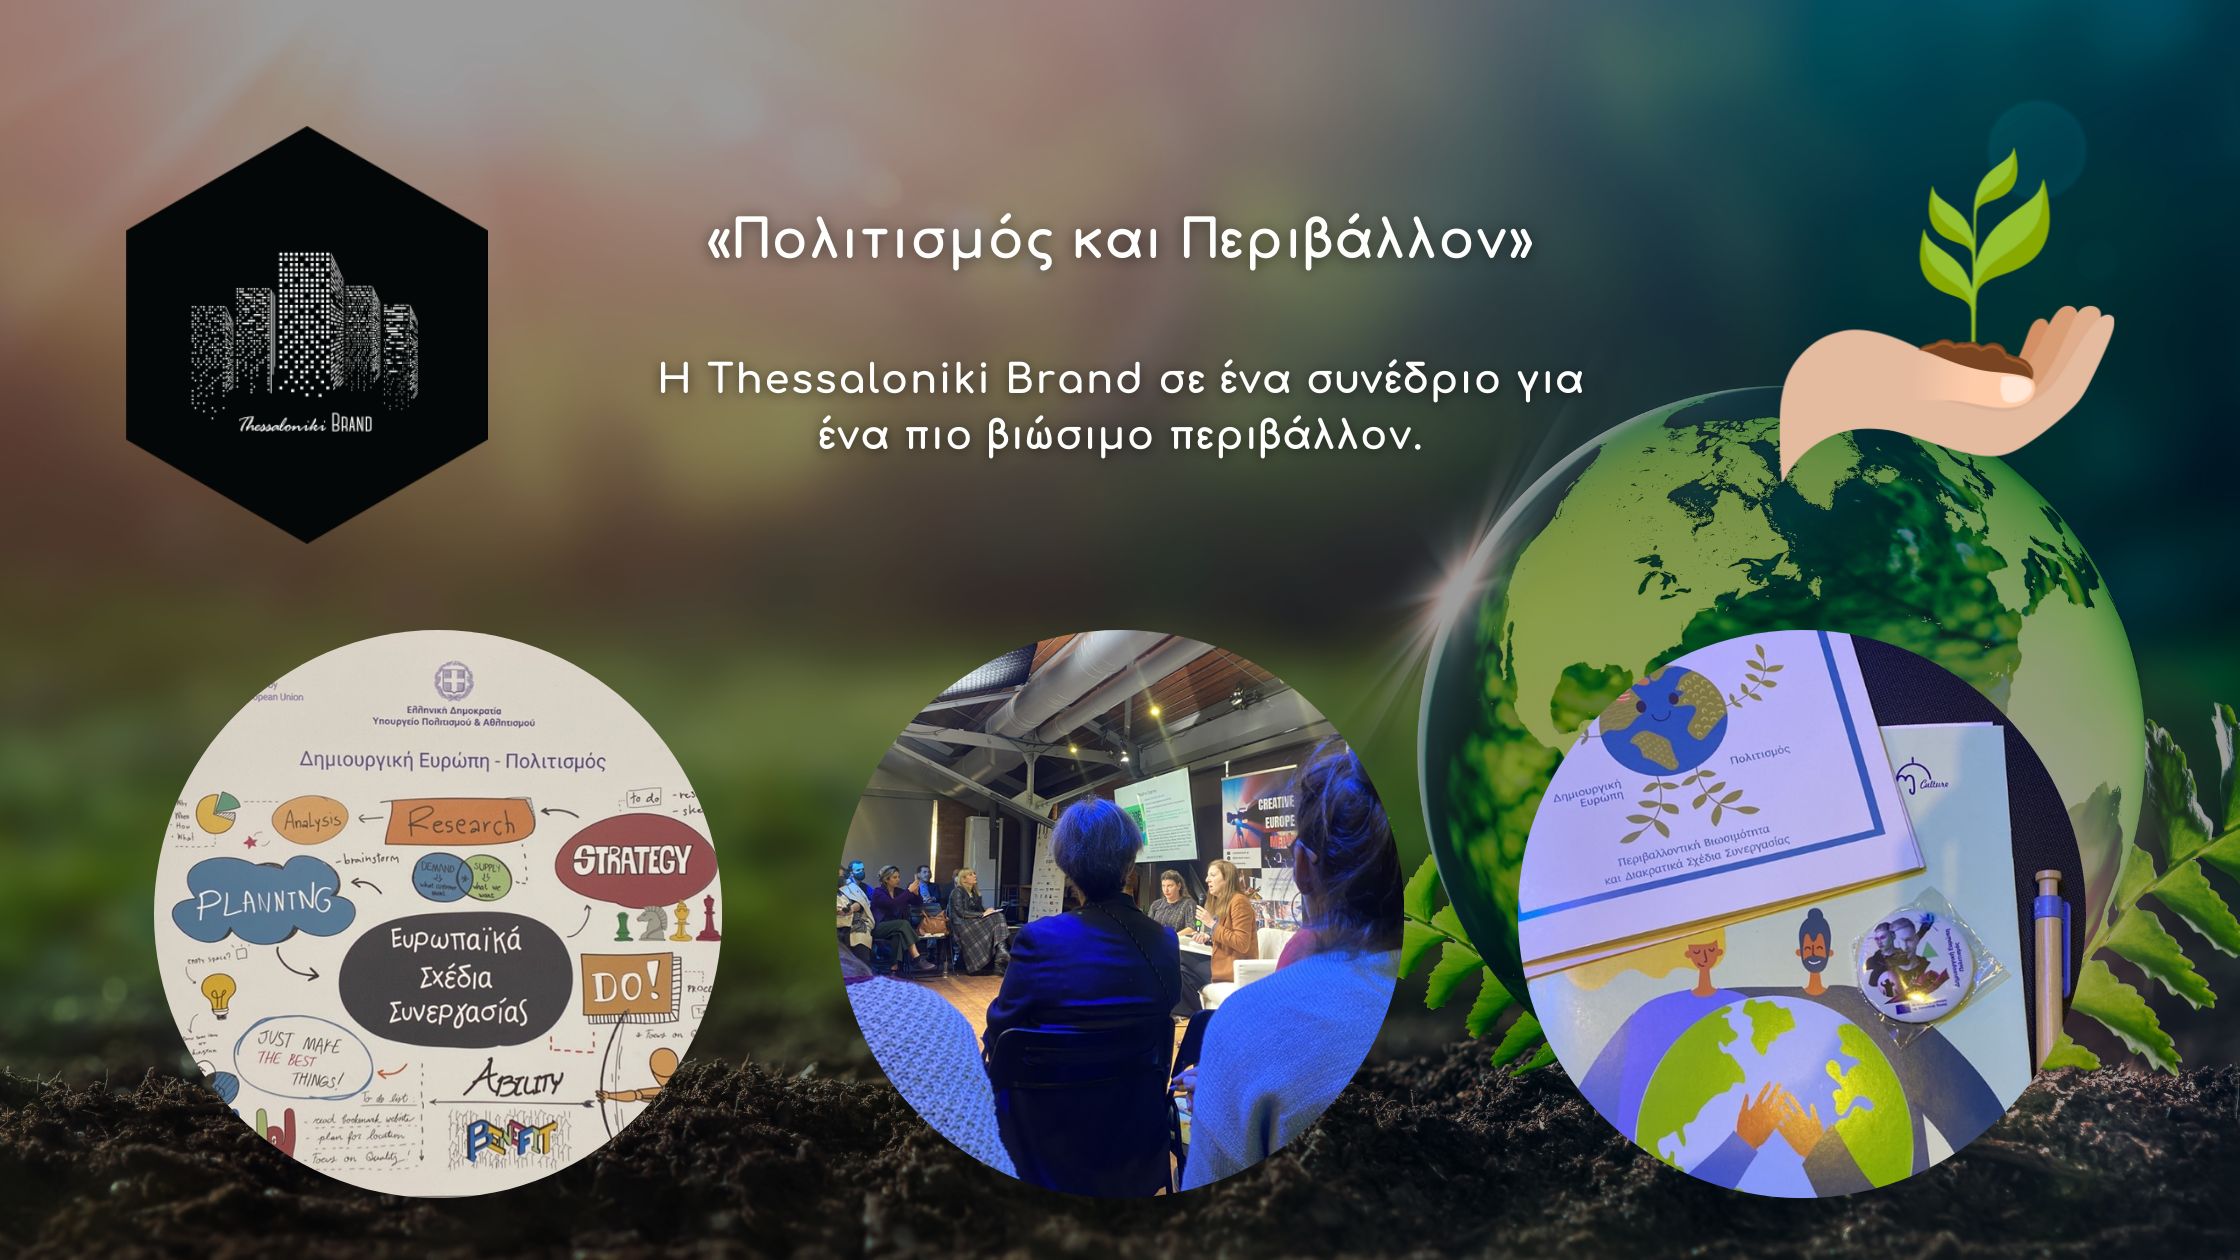 You are currently viewing «Πολιτισμός και Περιβάλλον»: Η Thessaloniki Brand σε ένα συνέδριο για ένα πιο βιώσιμο περιβάλλον.